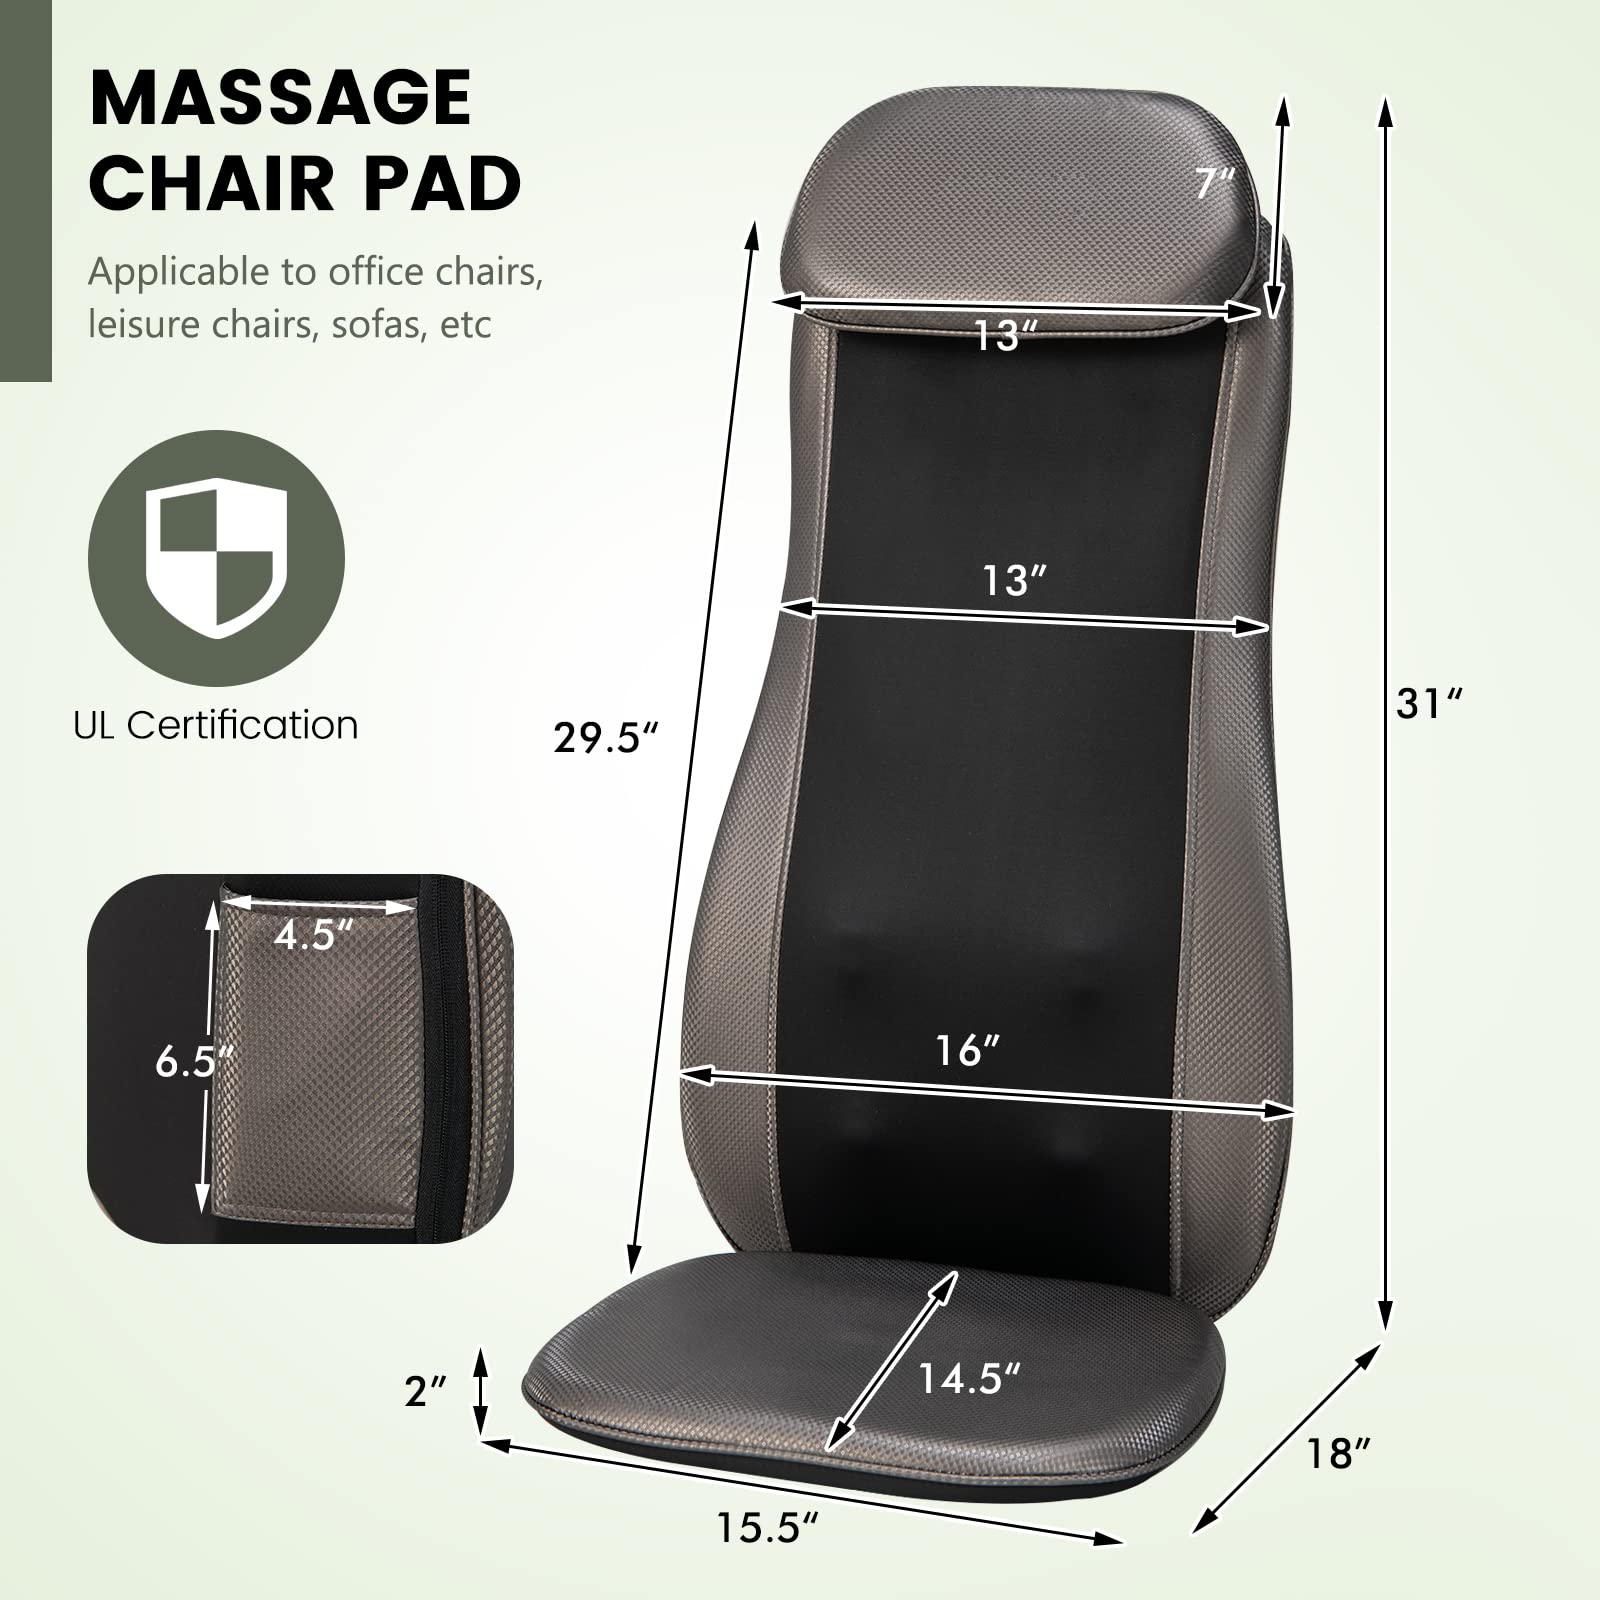 Giantex Back Massager Chair Pad - Massage Seat Cushion with Heat & Vibration